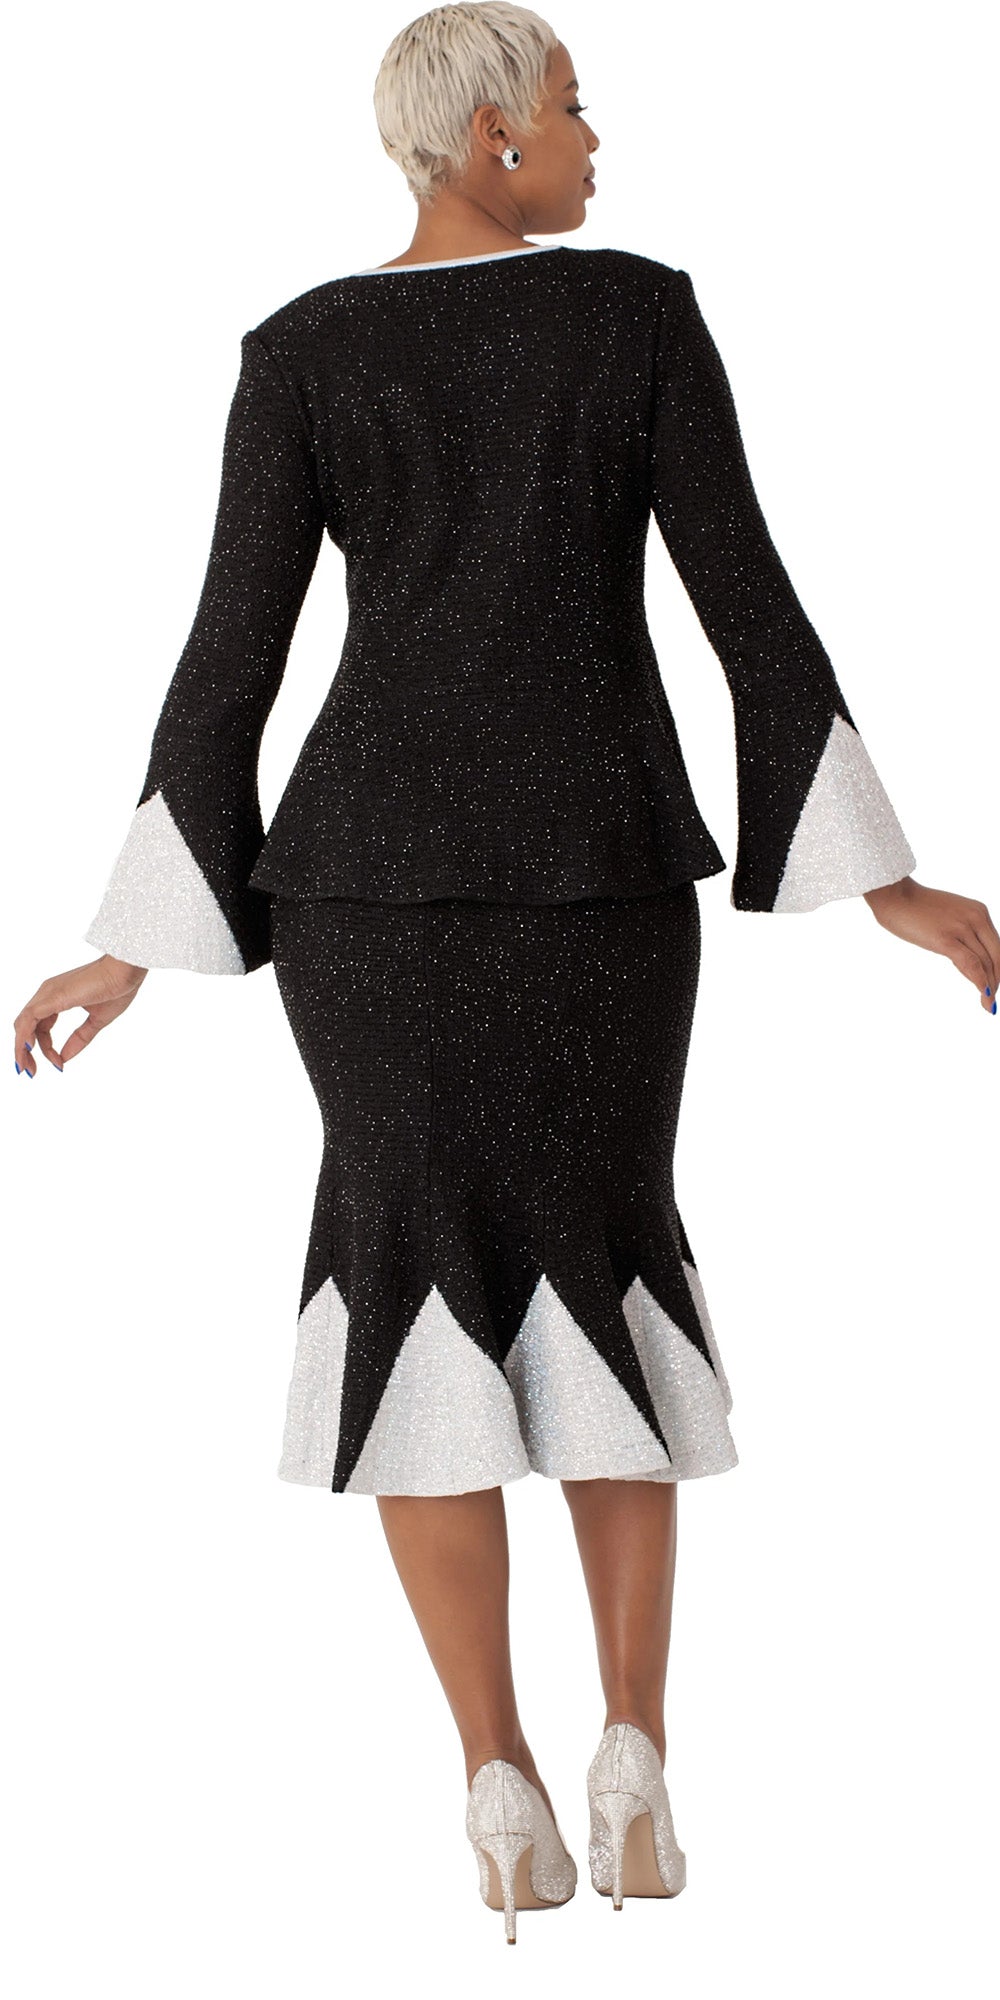 Liorah Knits 7301 - Black/Silver - 2 PC Rhinestone Embellished Knit Skirt Suit